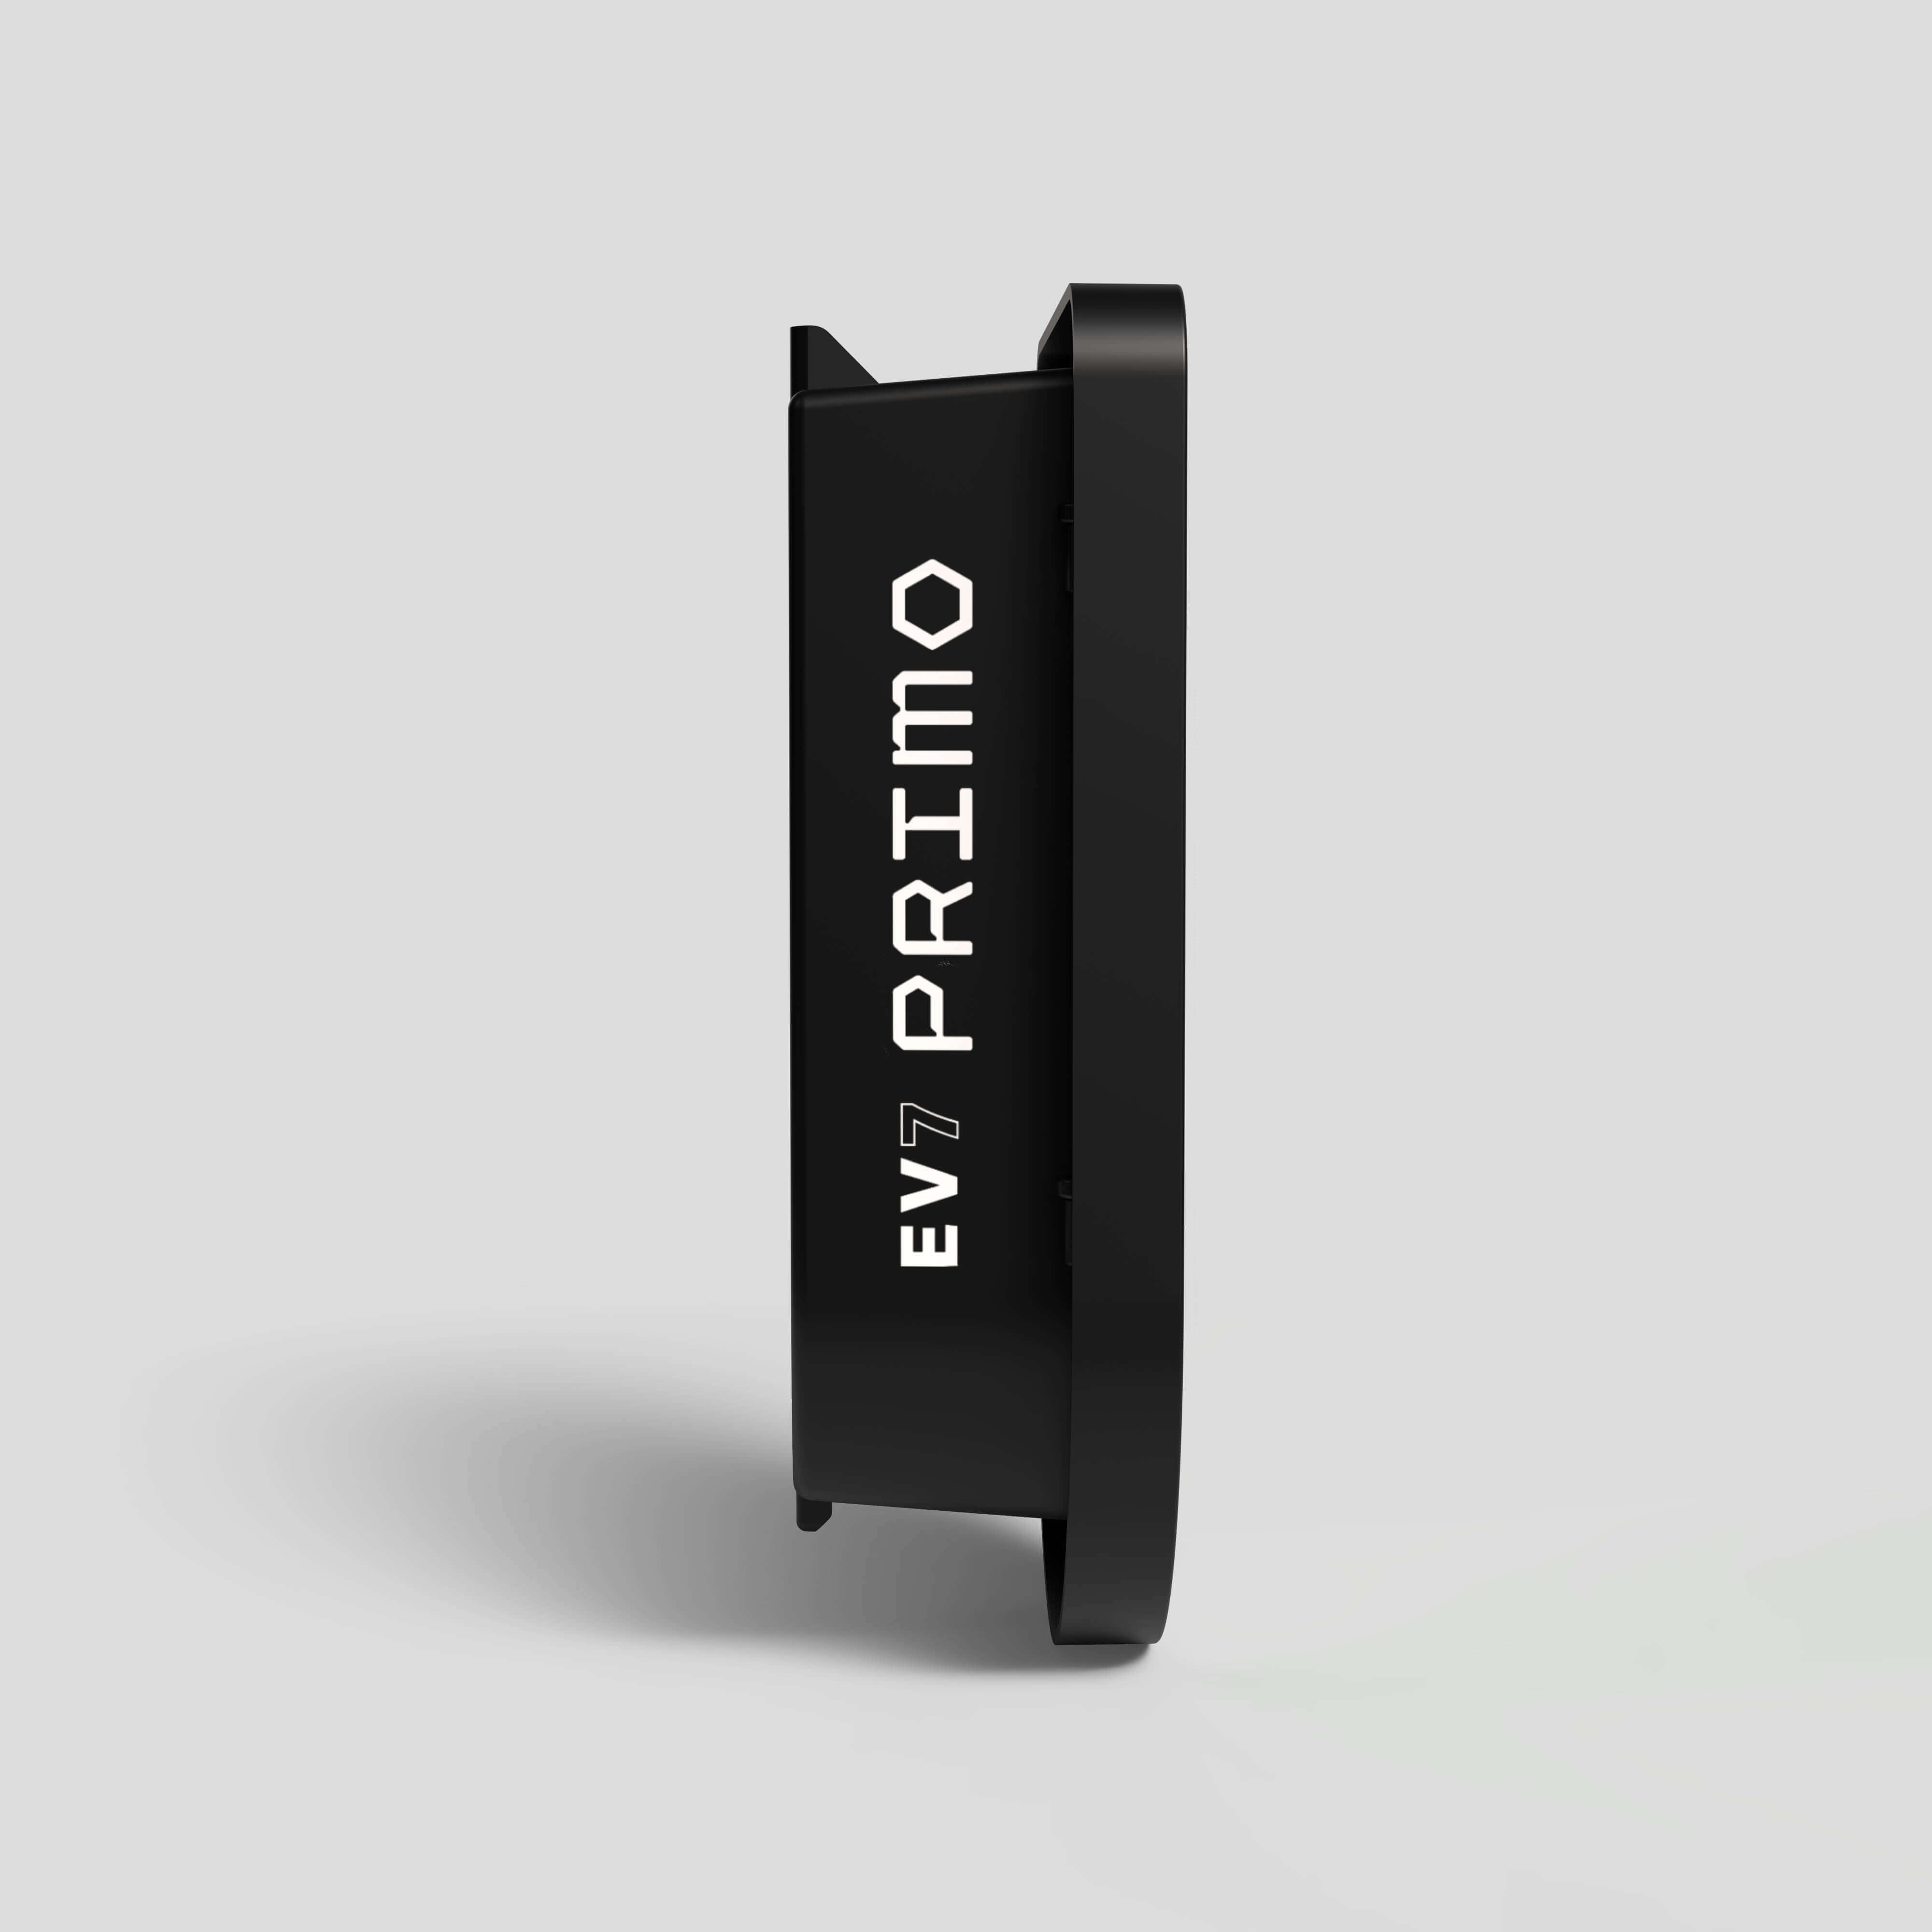 techtron EV7 PRIMO - Voice Controlled + Touchscreen ev-Charger (7.4 kW, Level 2) - Type 2 techtron